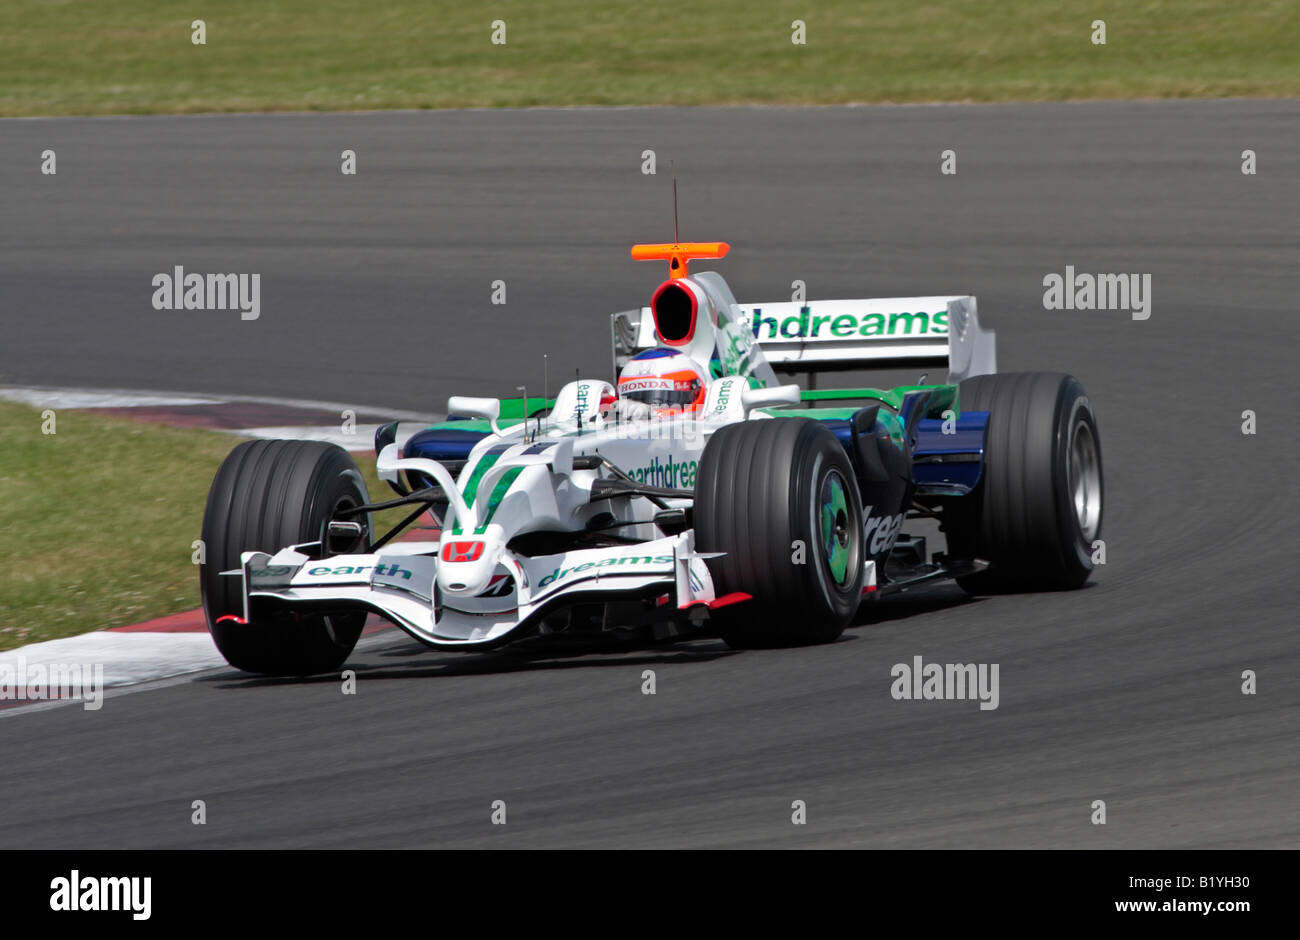 Rubens Barrichello in a honda f1 racing car Silverstone testing 2008 Stock Photo